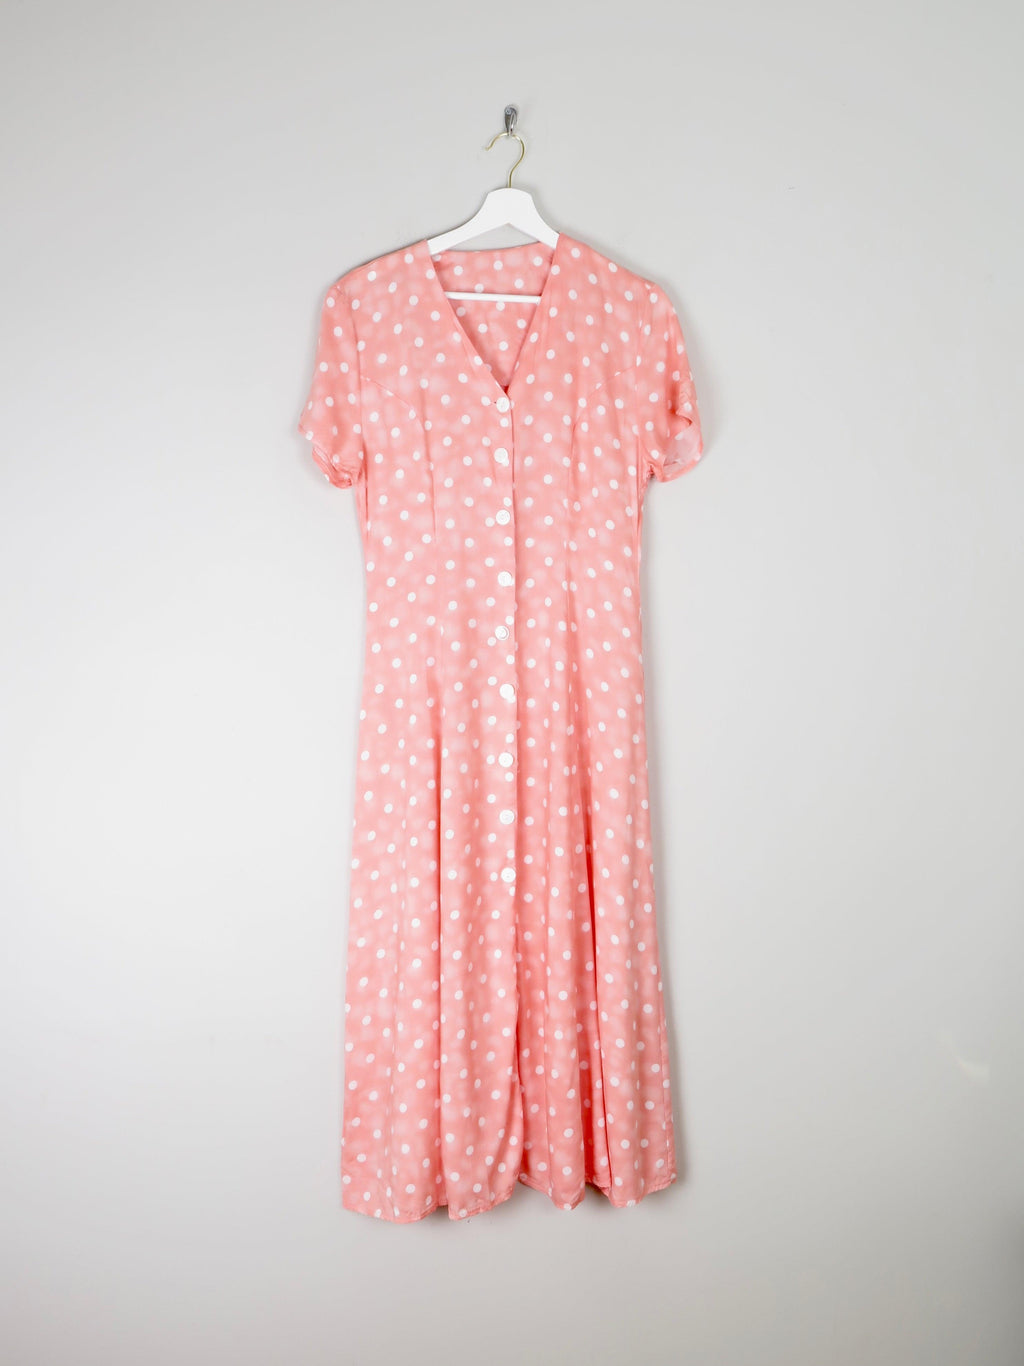 1990s Classic Peach Polka Dot Button Down Midi Dress Unworn 8/10 - The Harlequin